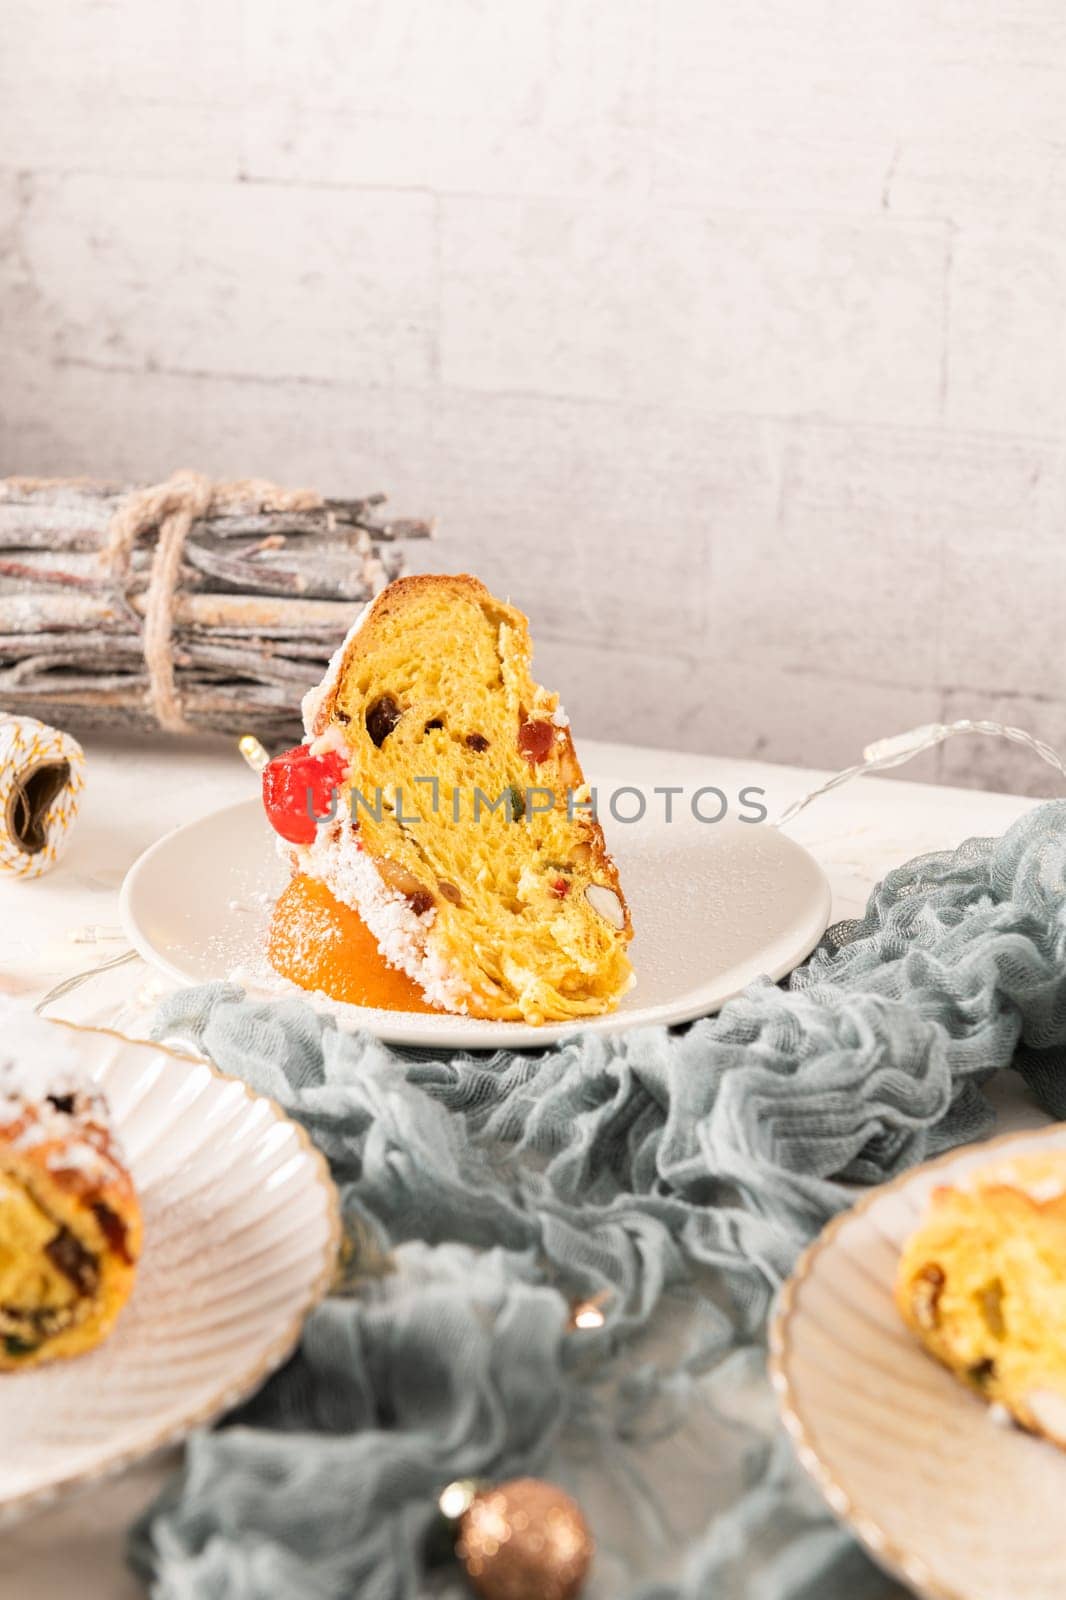 Bolo do Rei or King's Cake by homydesign